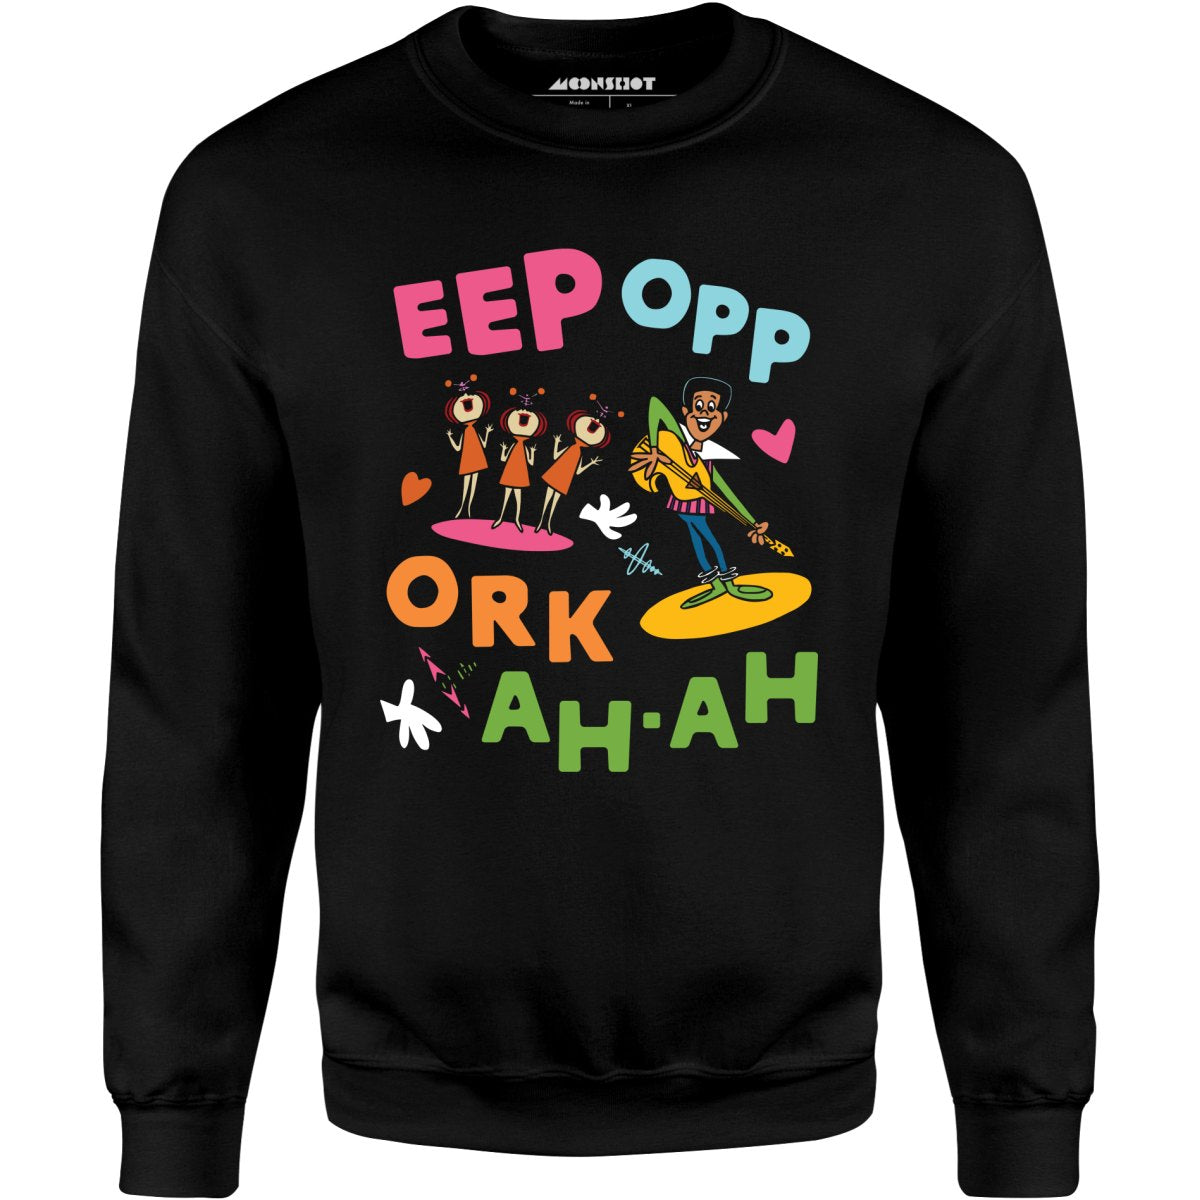 Eep Opp Ork Ah Ah - Unisex Sweatshirt